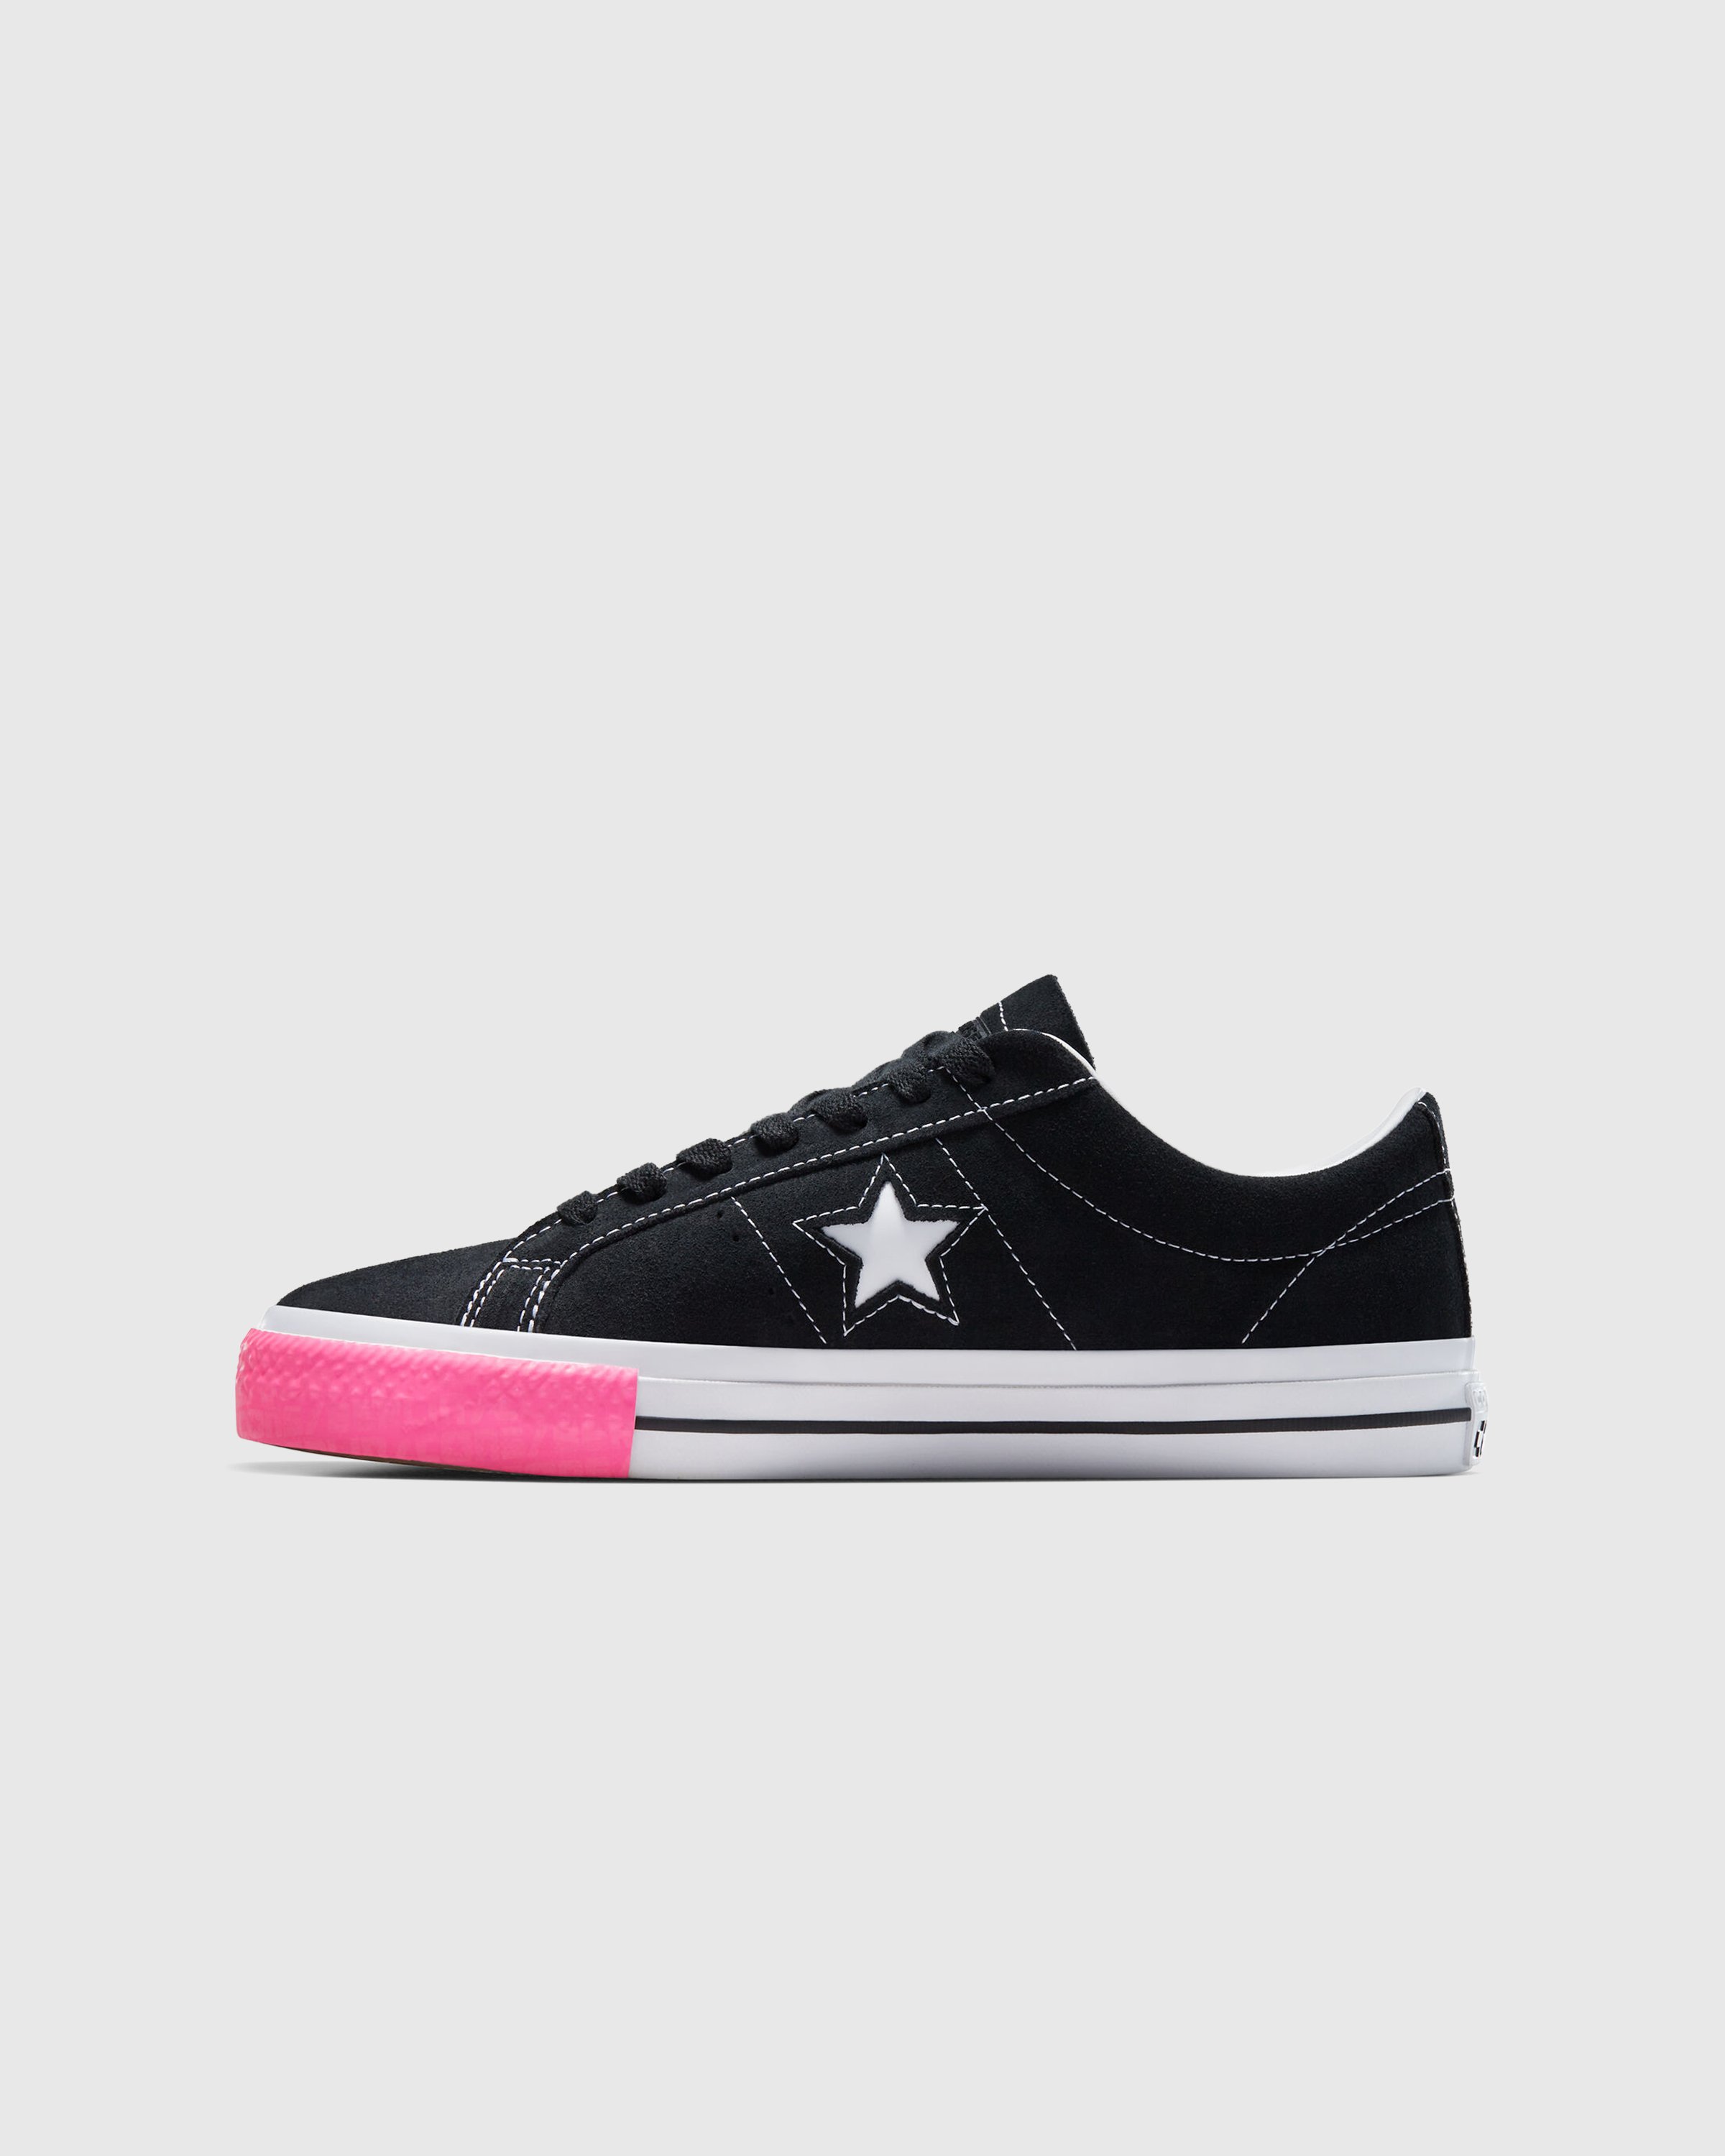 Converse - One Star Pro Berlin Black/Pink - Footwear - Black - Image 2